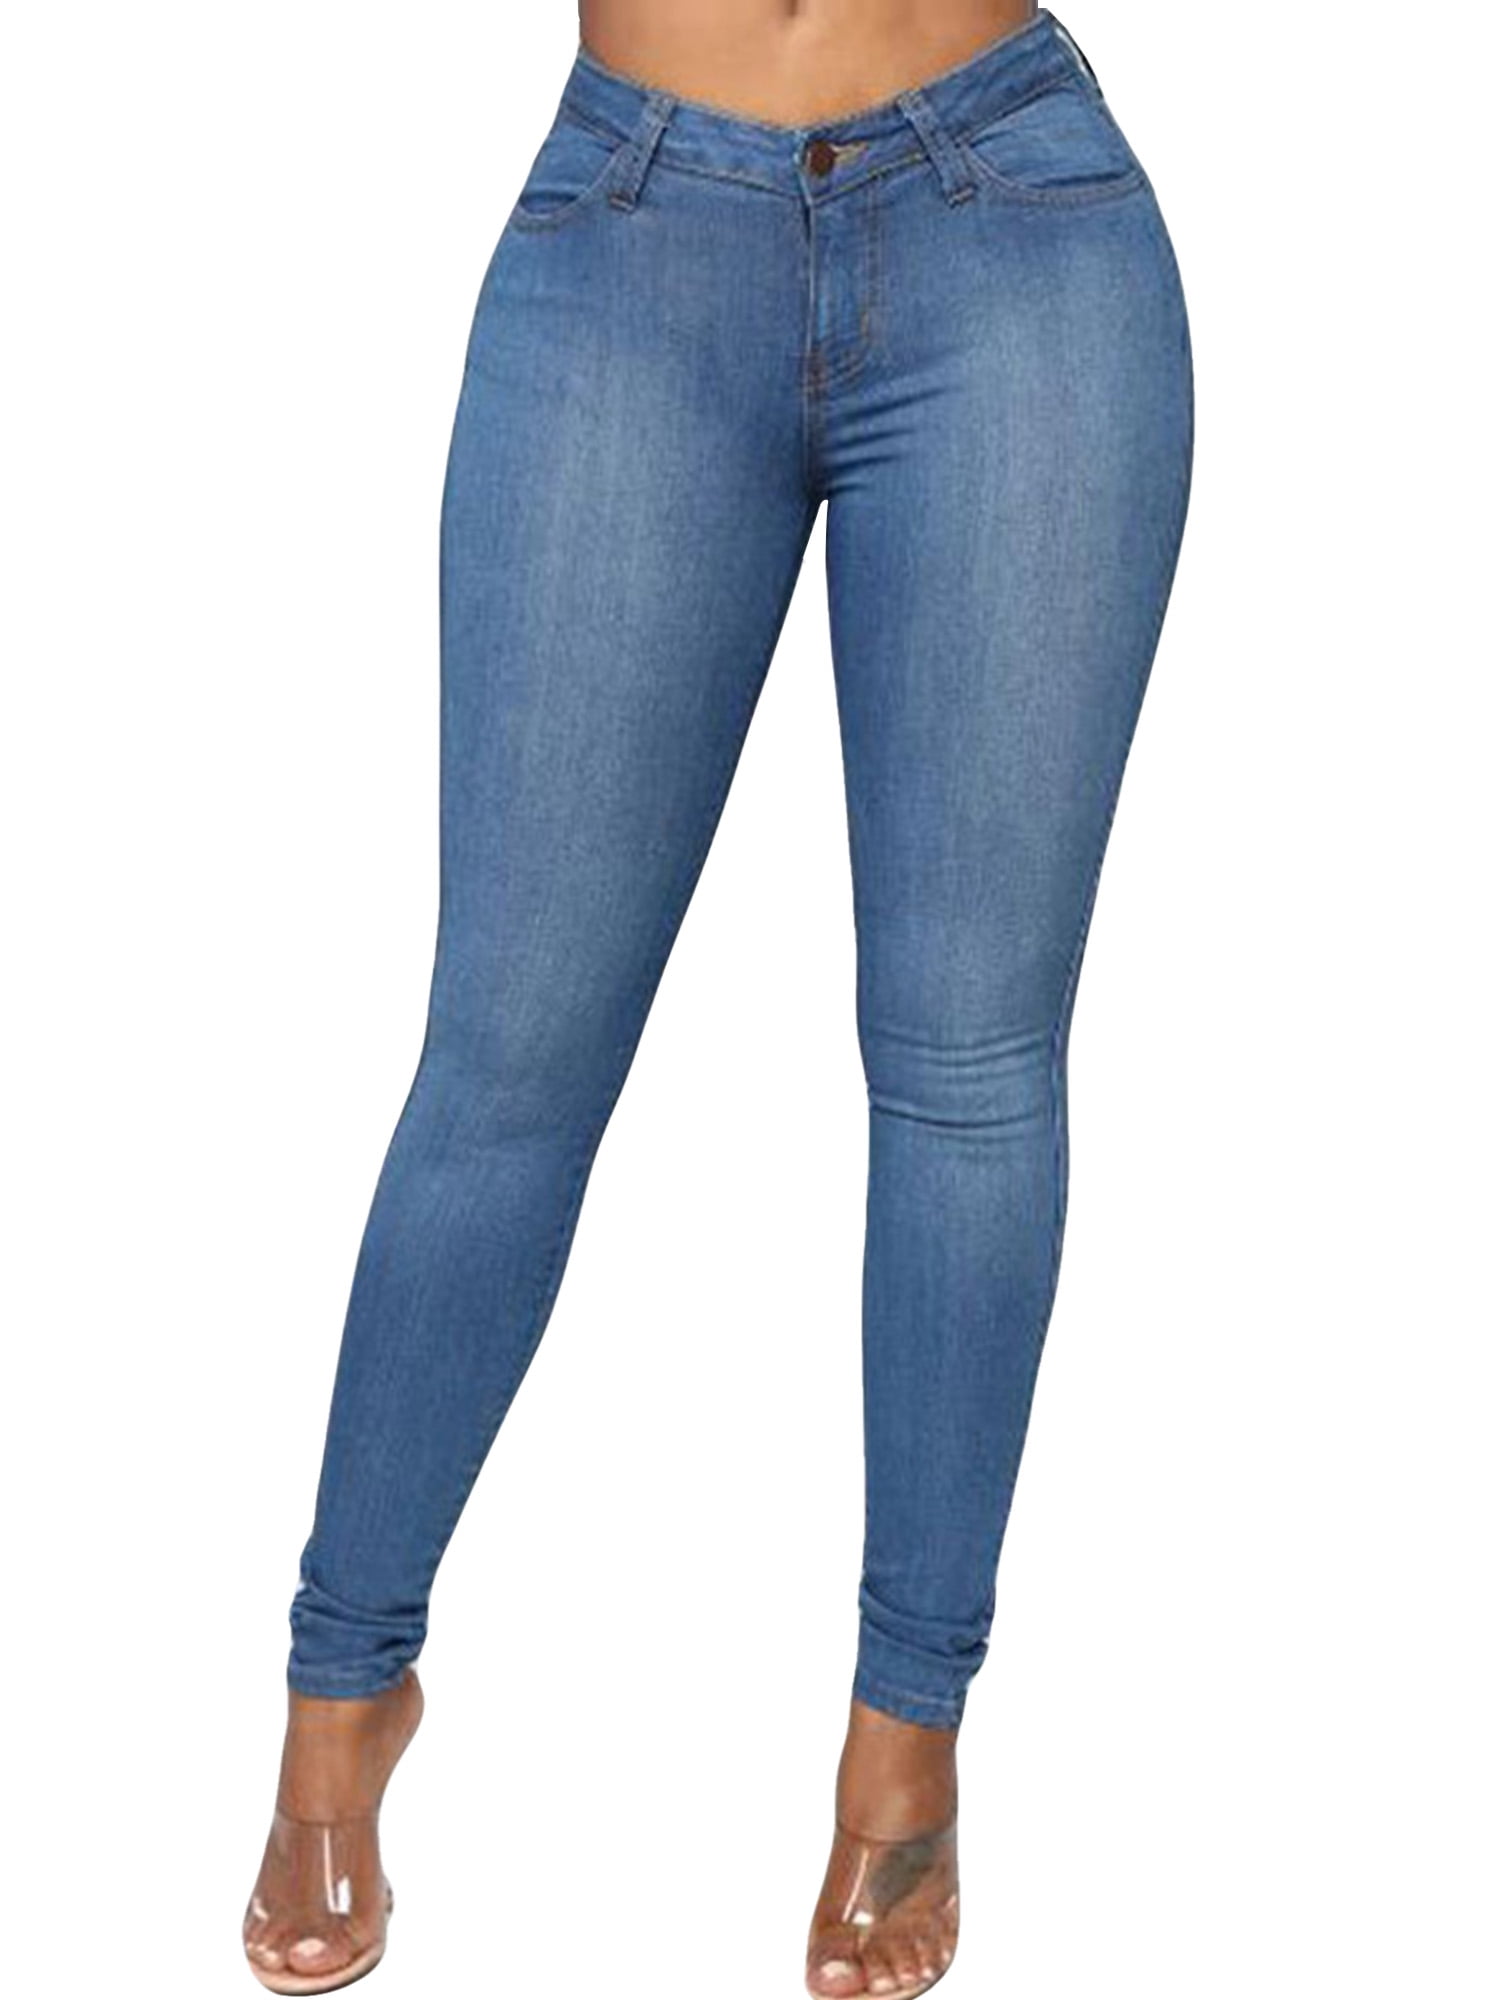 Women's Skinny Super Stretchy Jeans Pencil Pants Fashion Sexy Streetwear  Trousers High Wasit Black White Blue Denim Pants Dark Blue M